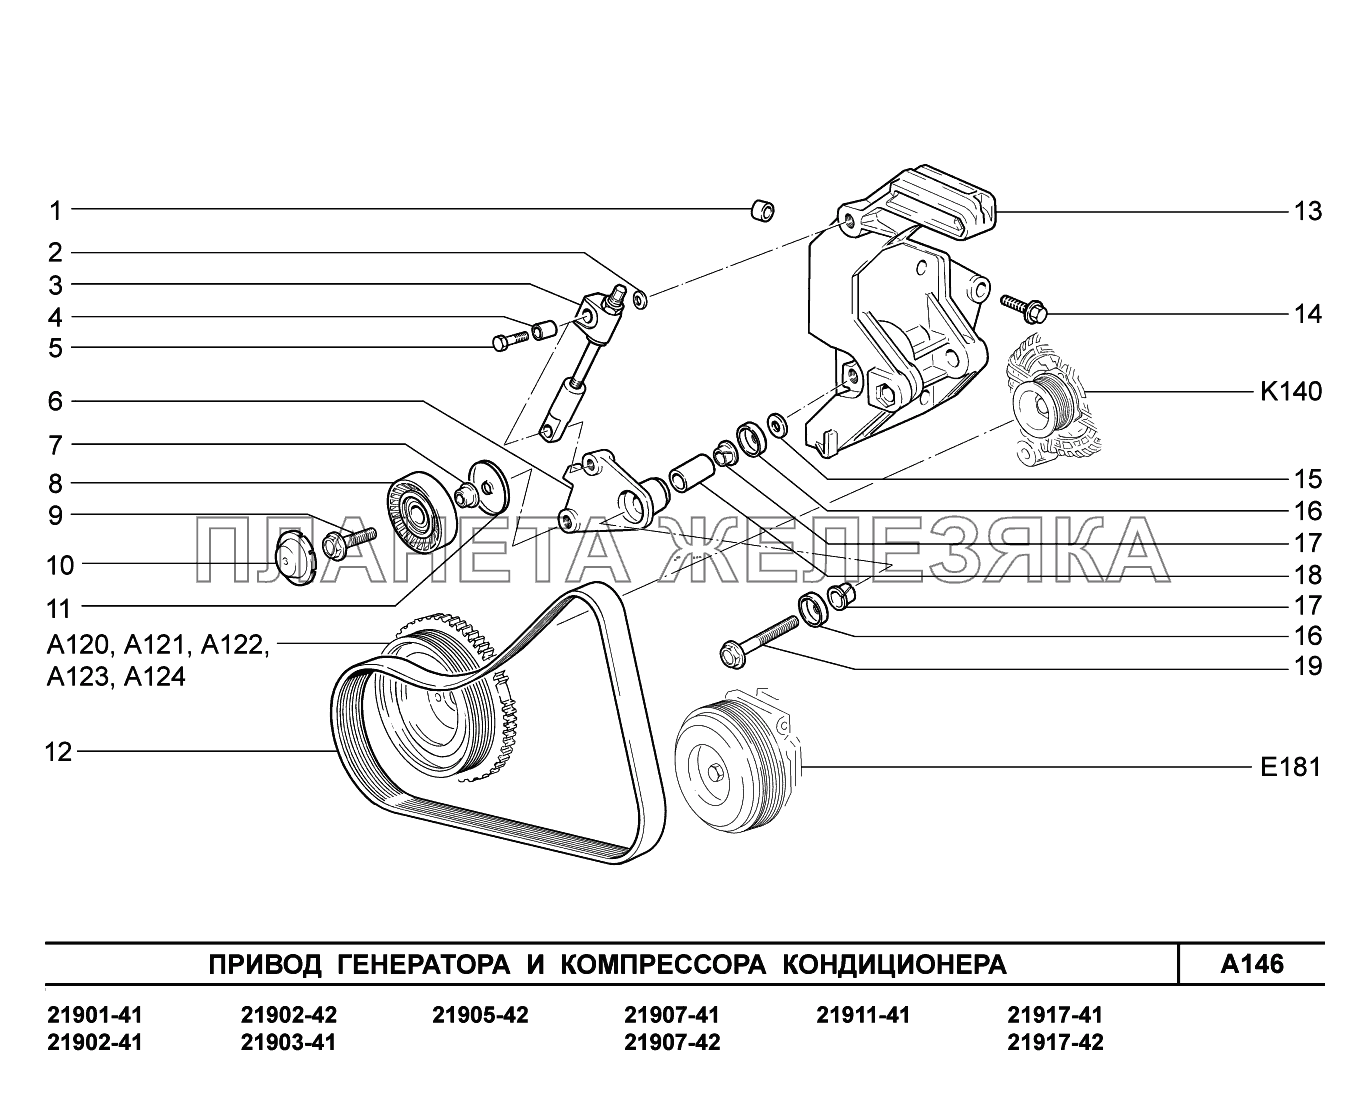 A146. Привод генератора и компрессора кондиционера Lada Granta-2190